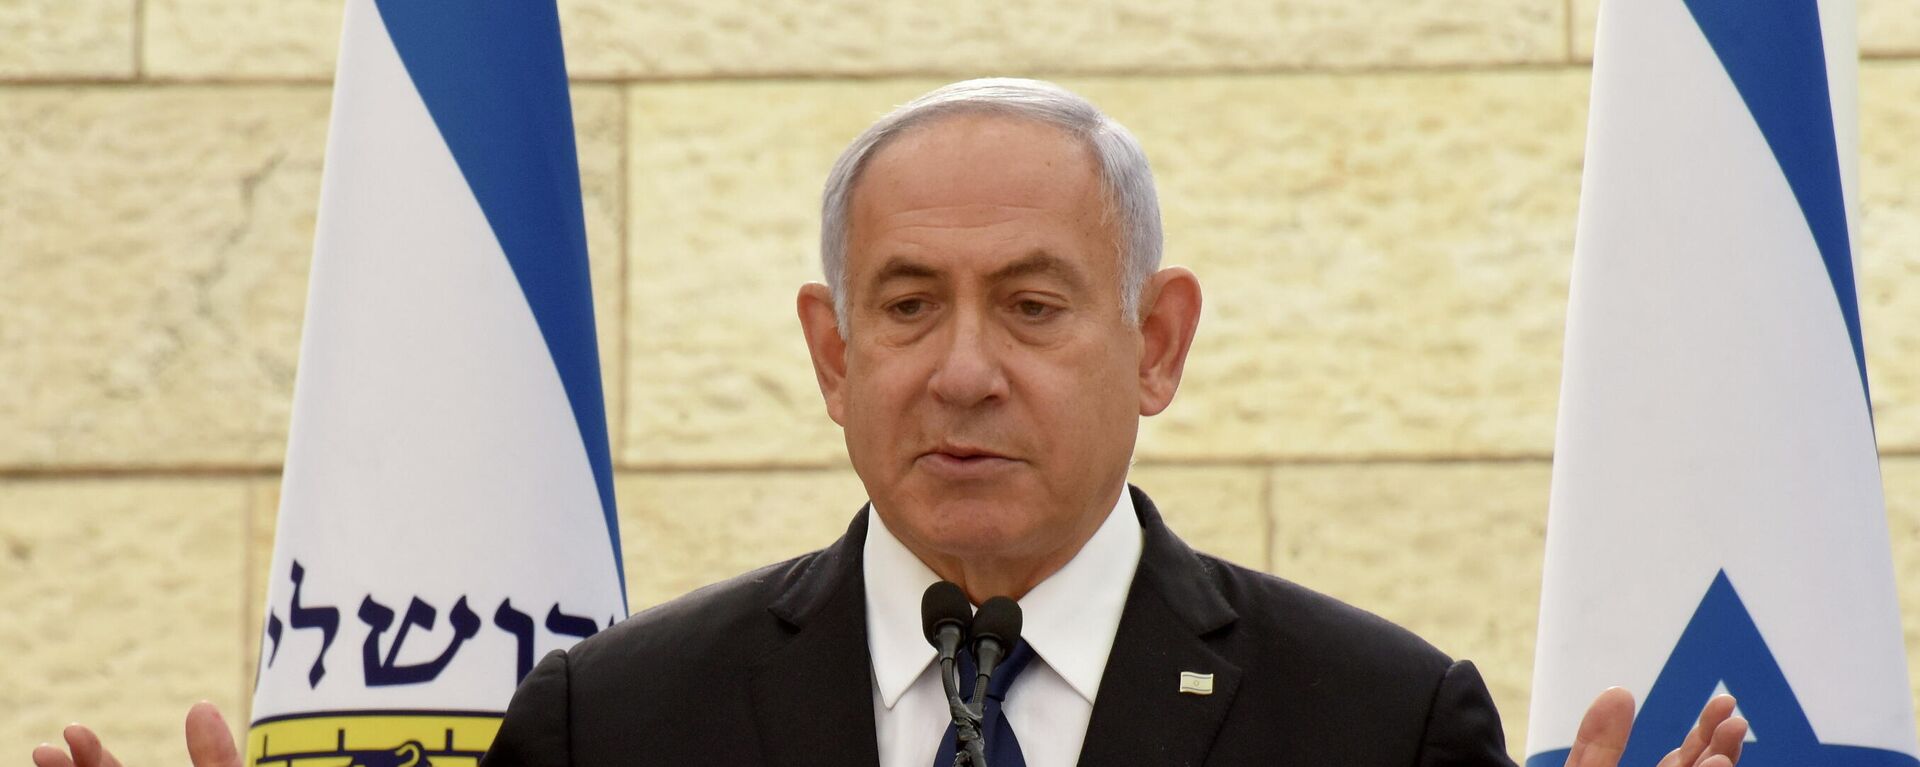 Benjamín Netanyahu, primer ministro israelí - Sputnik Mundo, 1920, 16.05.2021